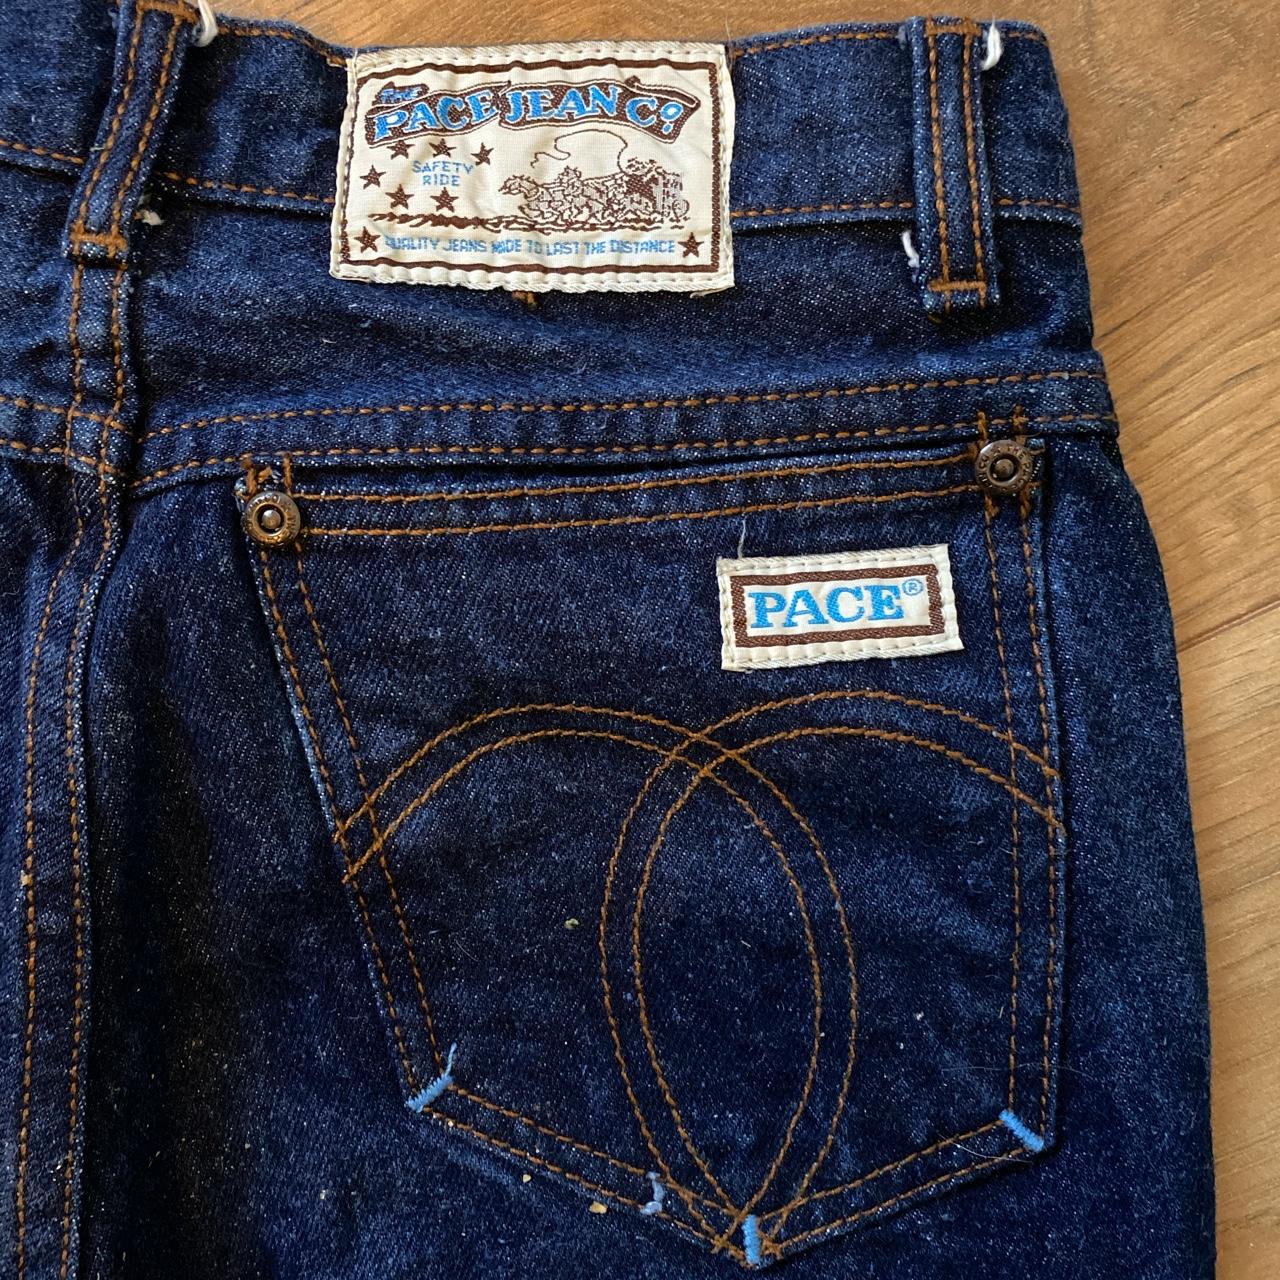 Pace Jeans vintage 70ies amazing condition look... - Depop